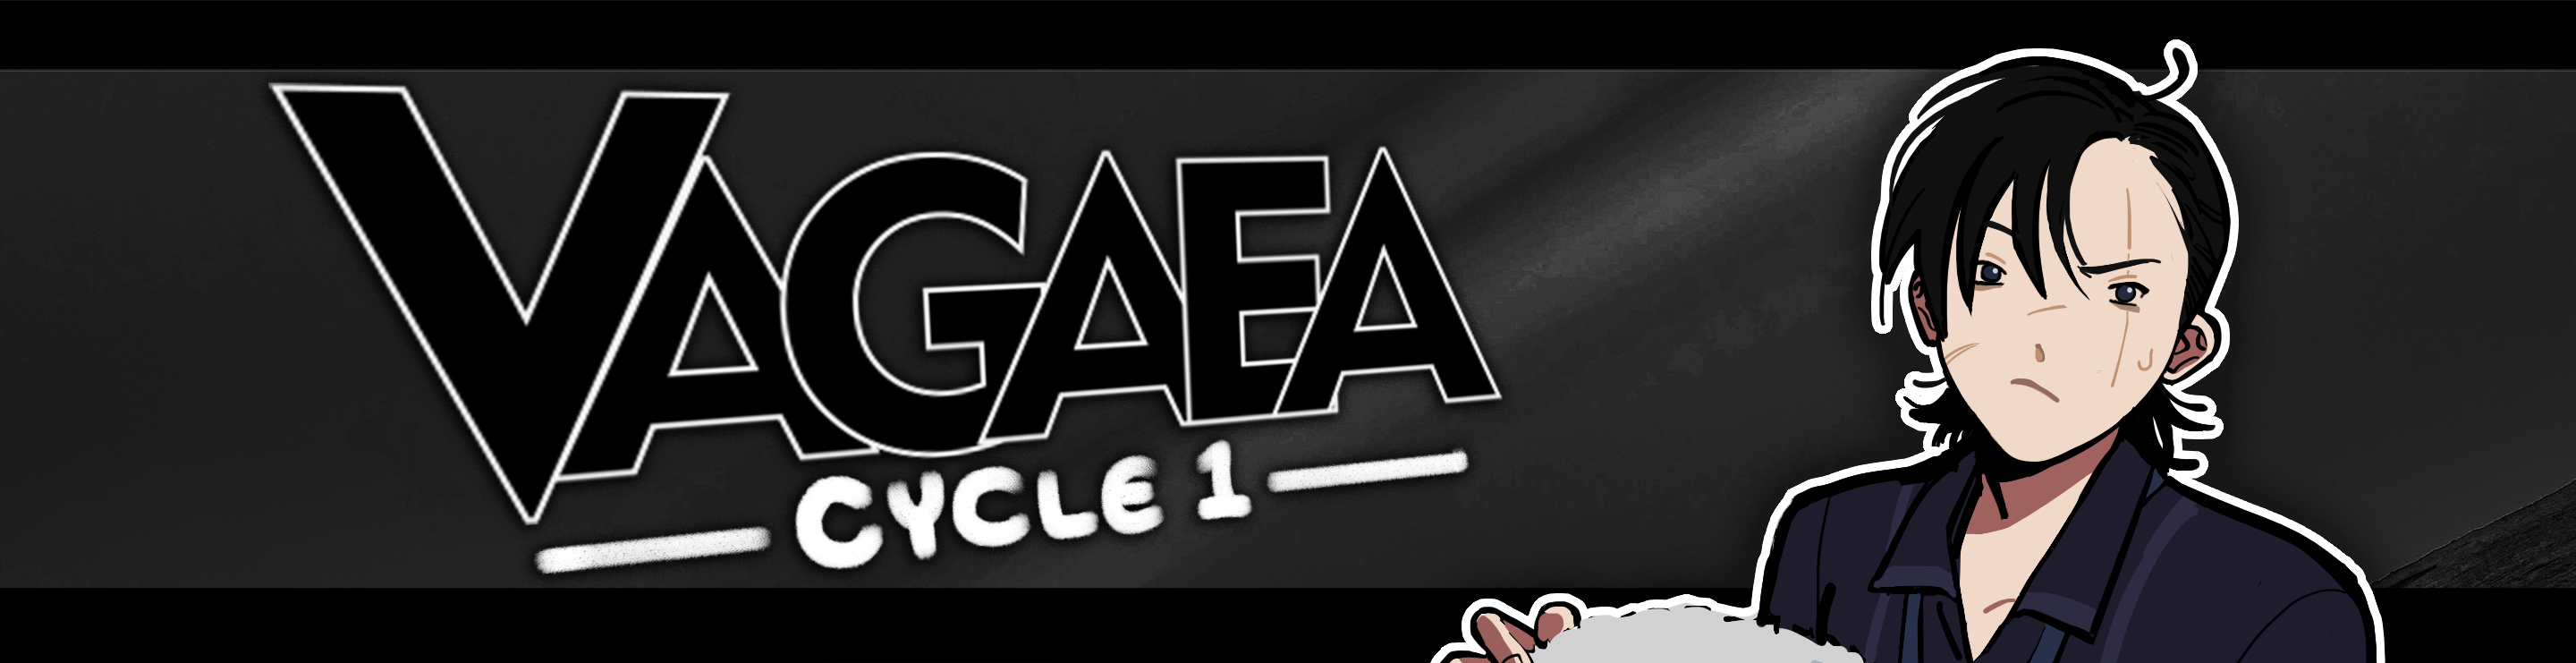 Vagaea: Cycle 1